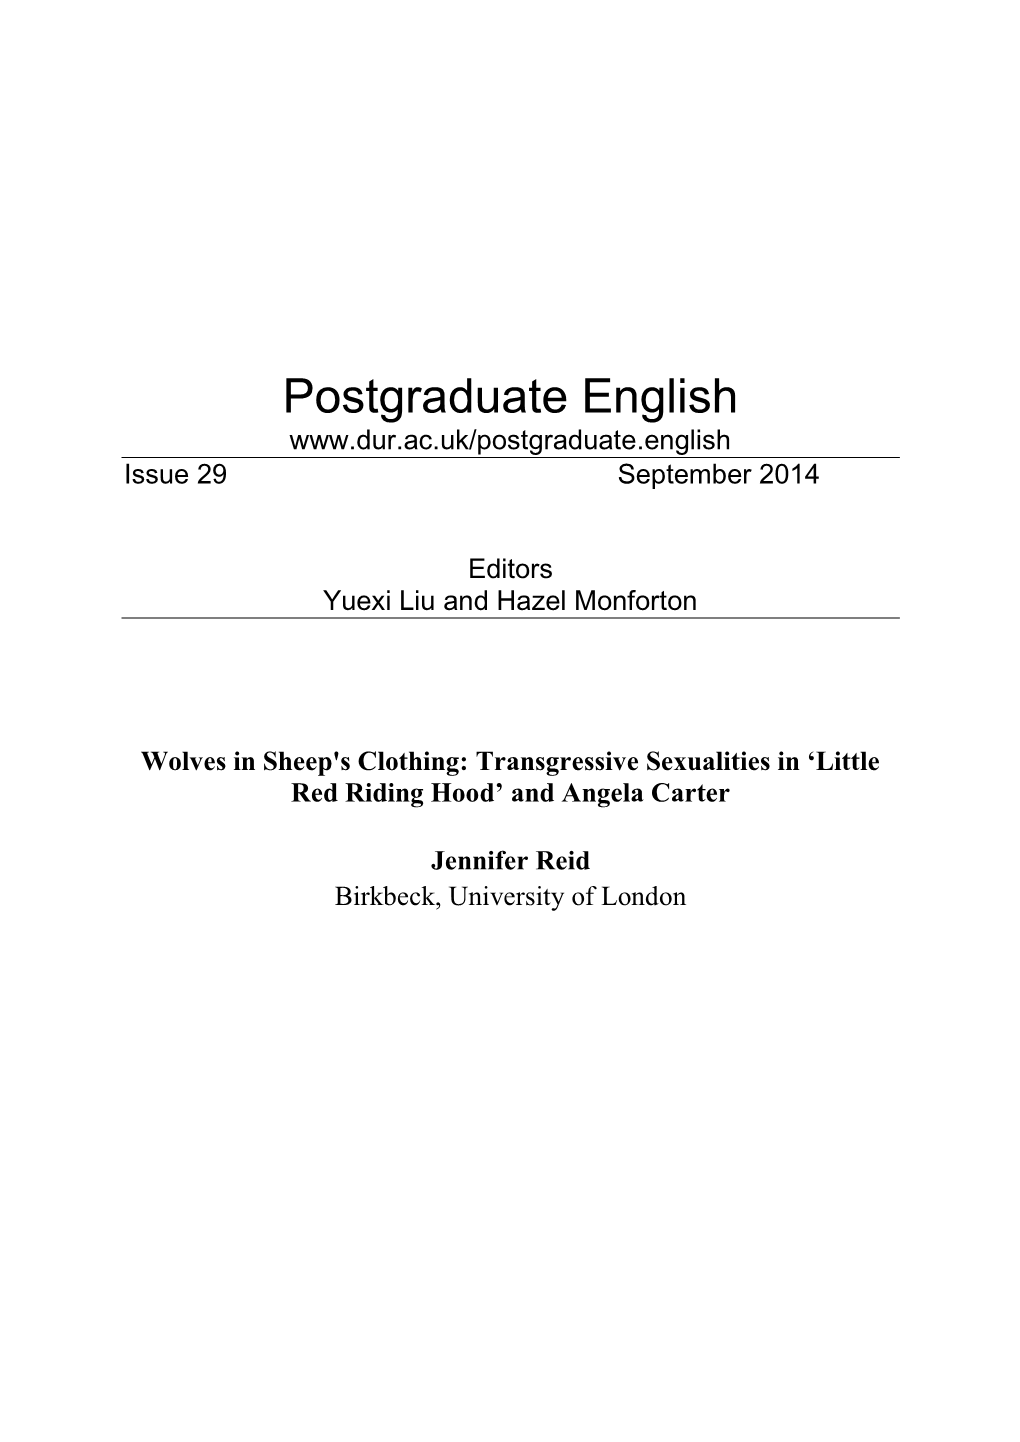 Postgraduate English Issue 29 September 2014